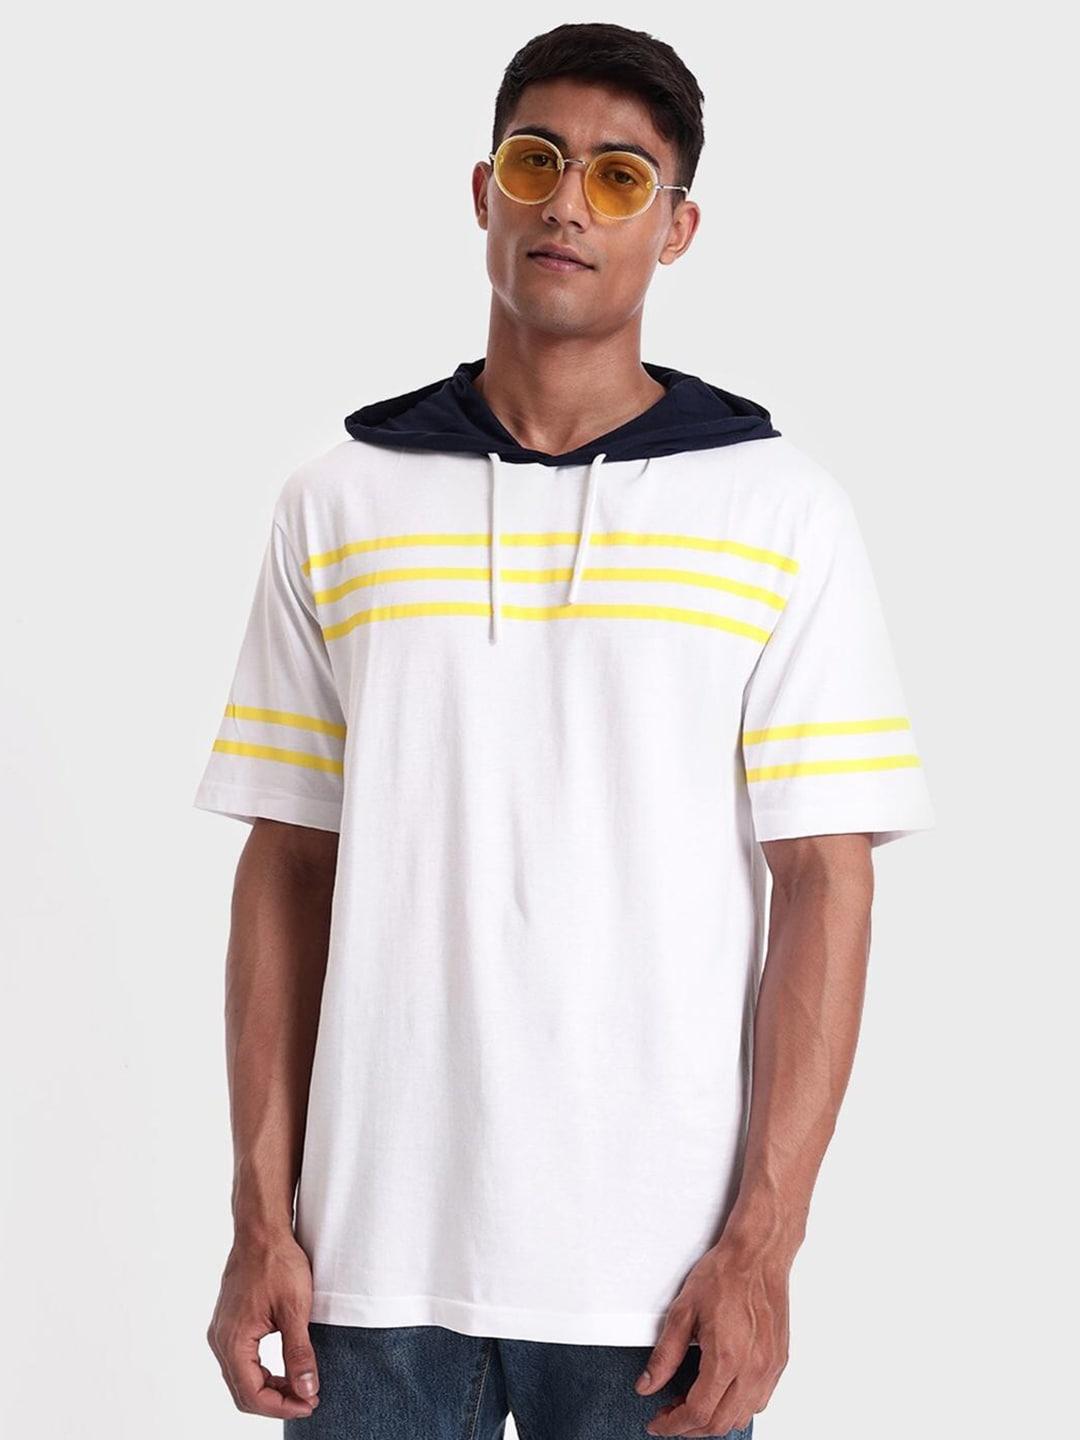 bewakoof men striped hooded pure cotton loose t-shirt